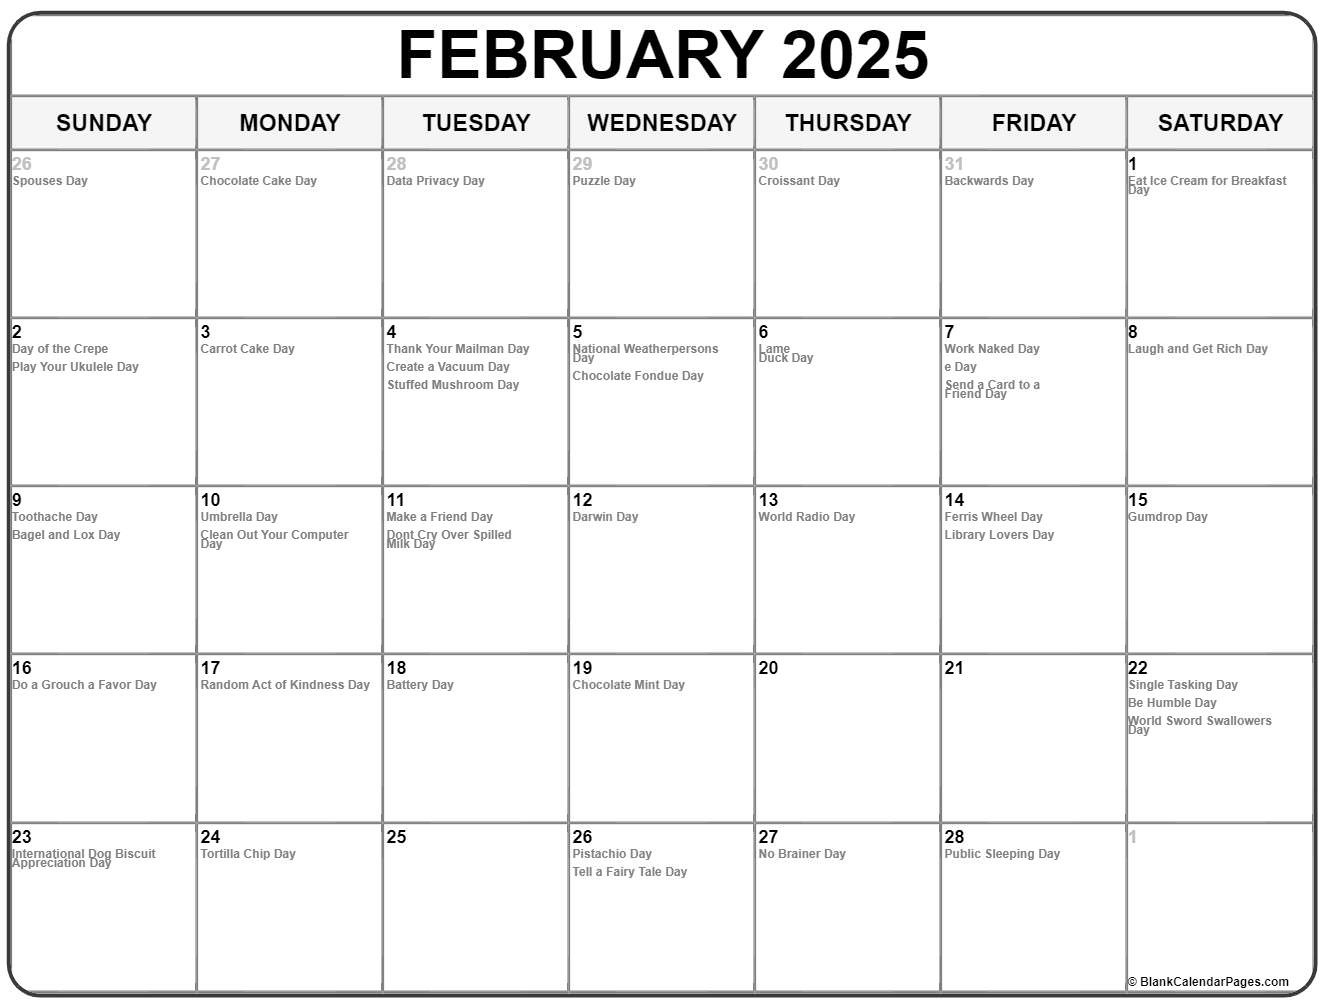 February 2025 Calendar Template Bank2home